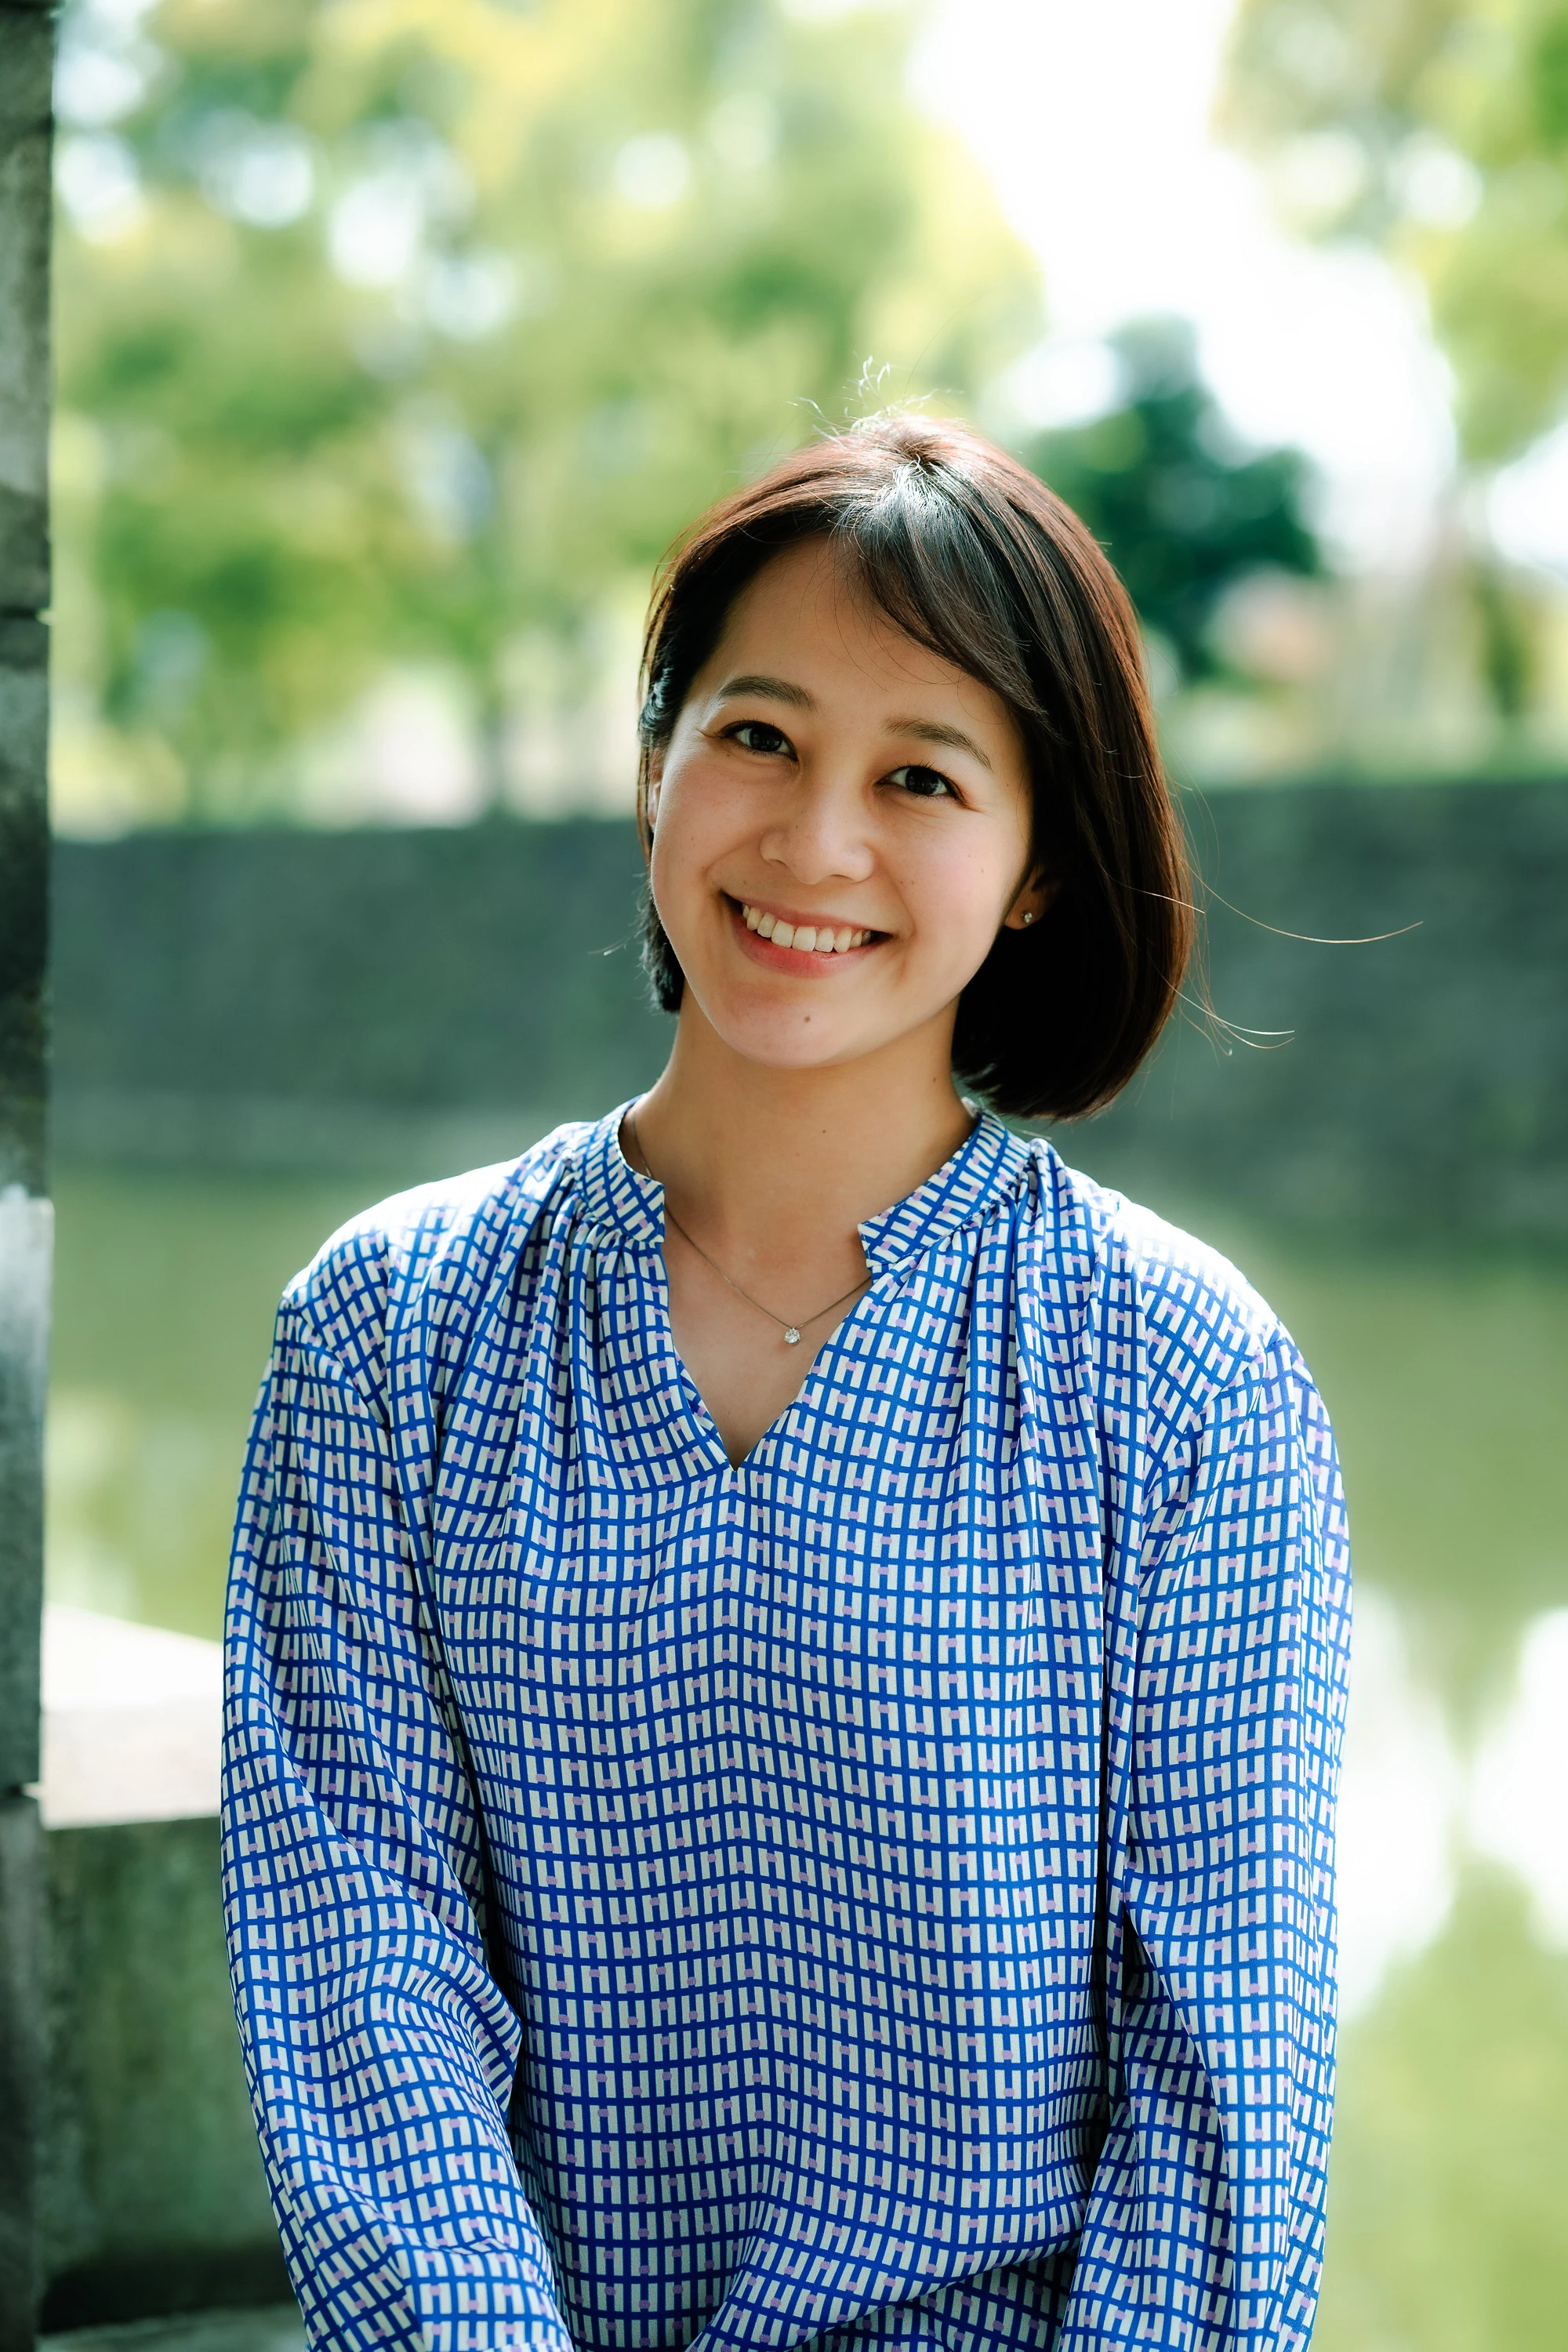 Yoko Okura is a Disaster Risk Management Specialist